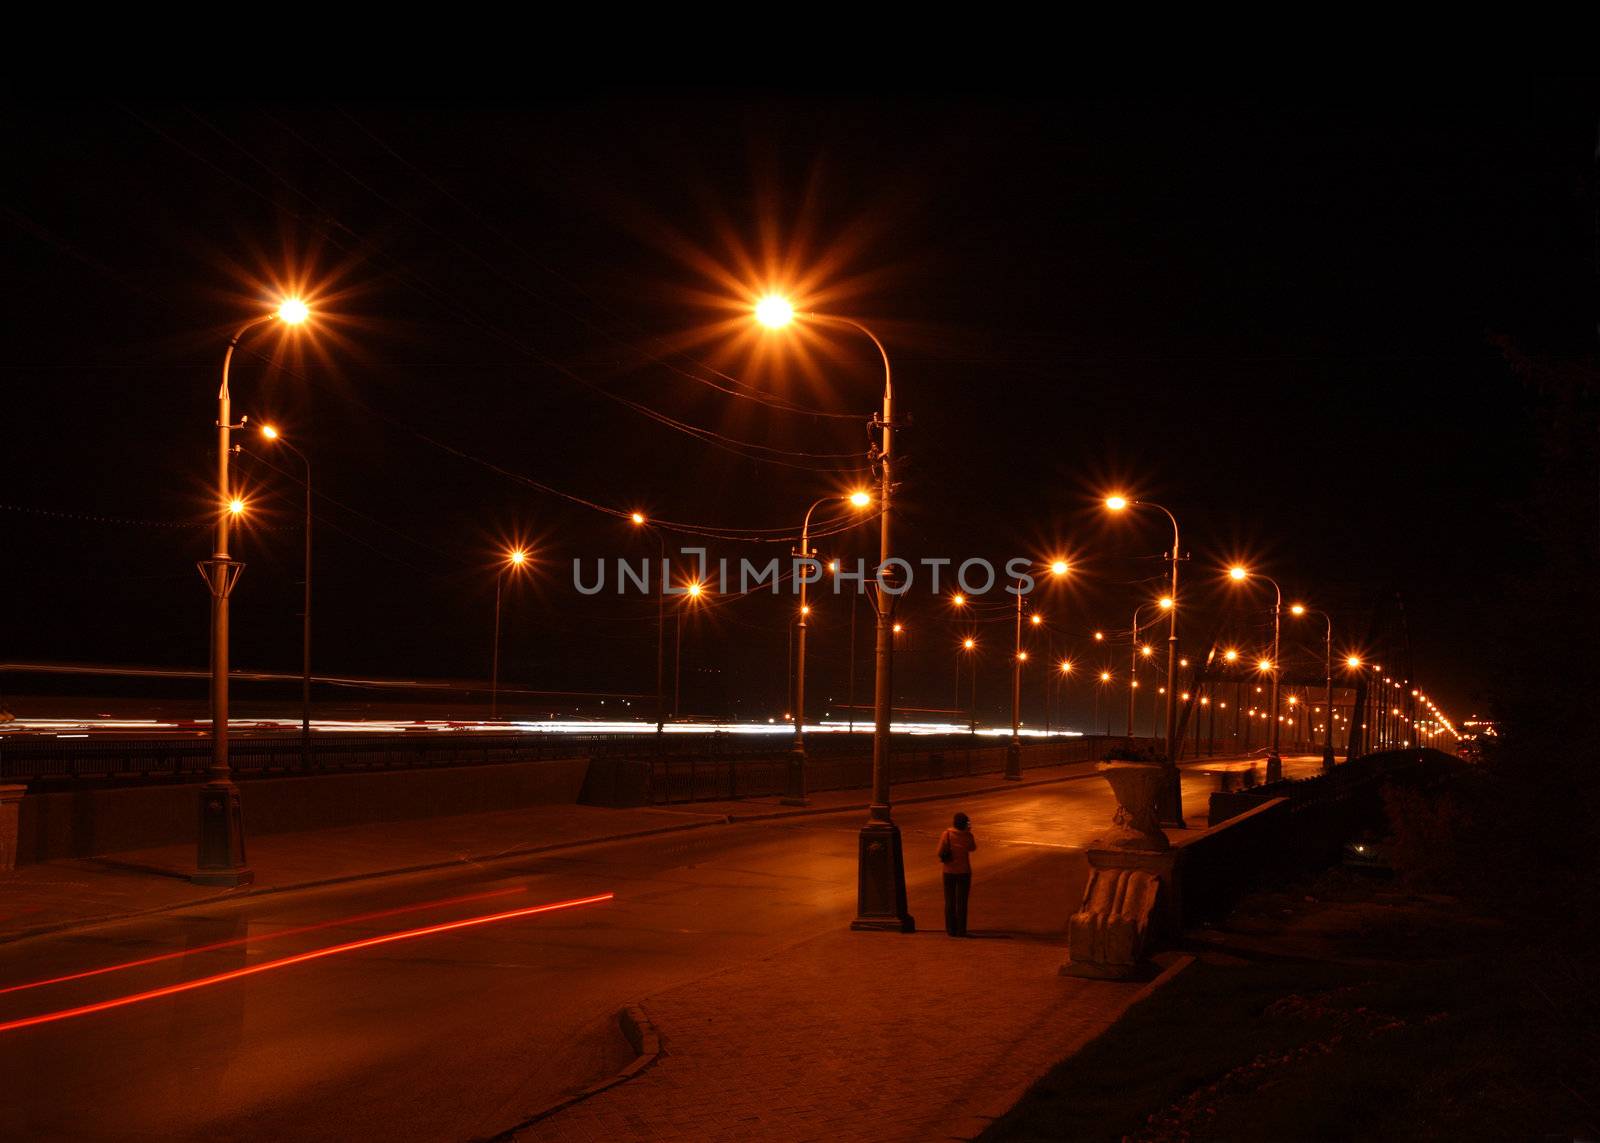 night road through bridge by Mikko